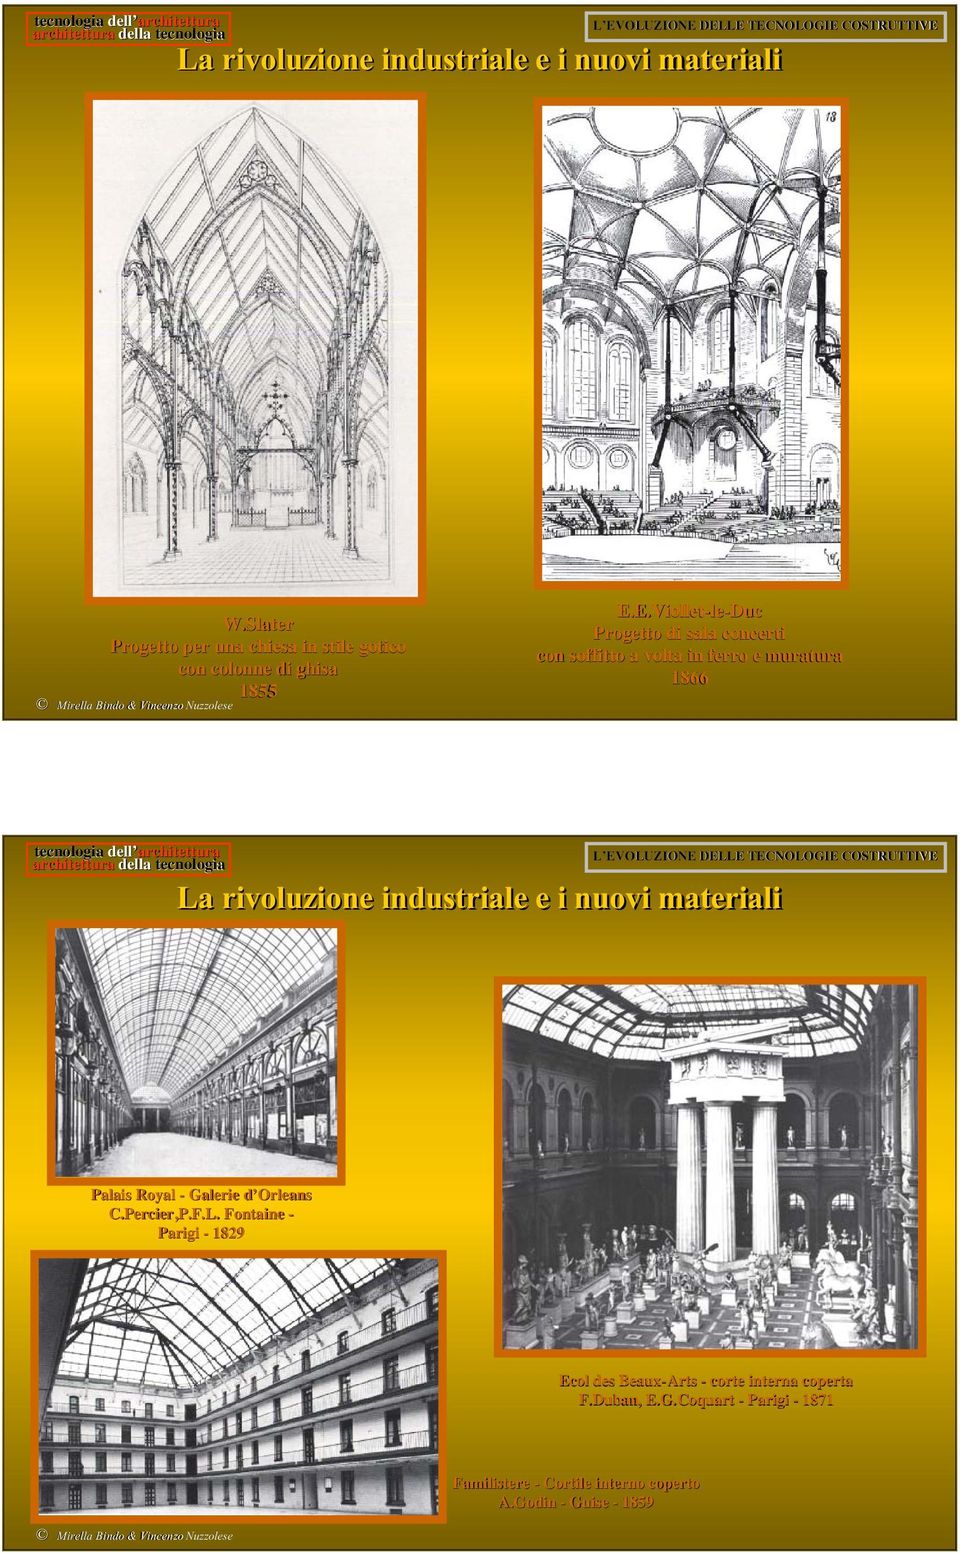 i nuovi materiali Palais Royal - Galerie d Orleans C.Percier Percier,P.F.L.